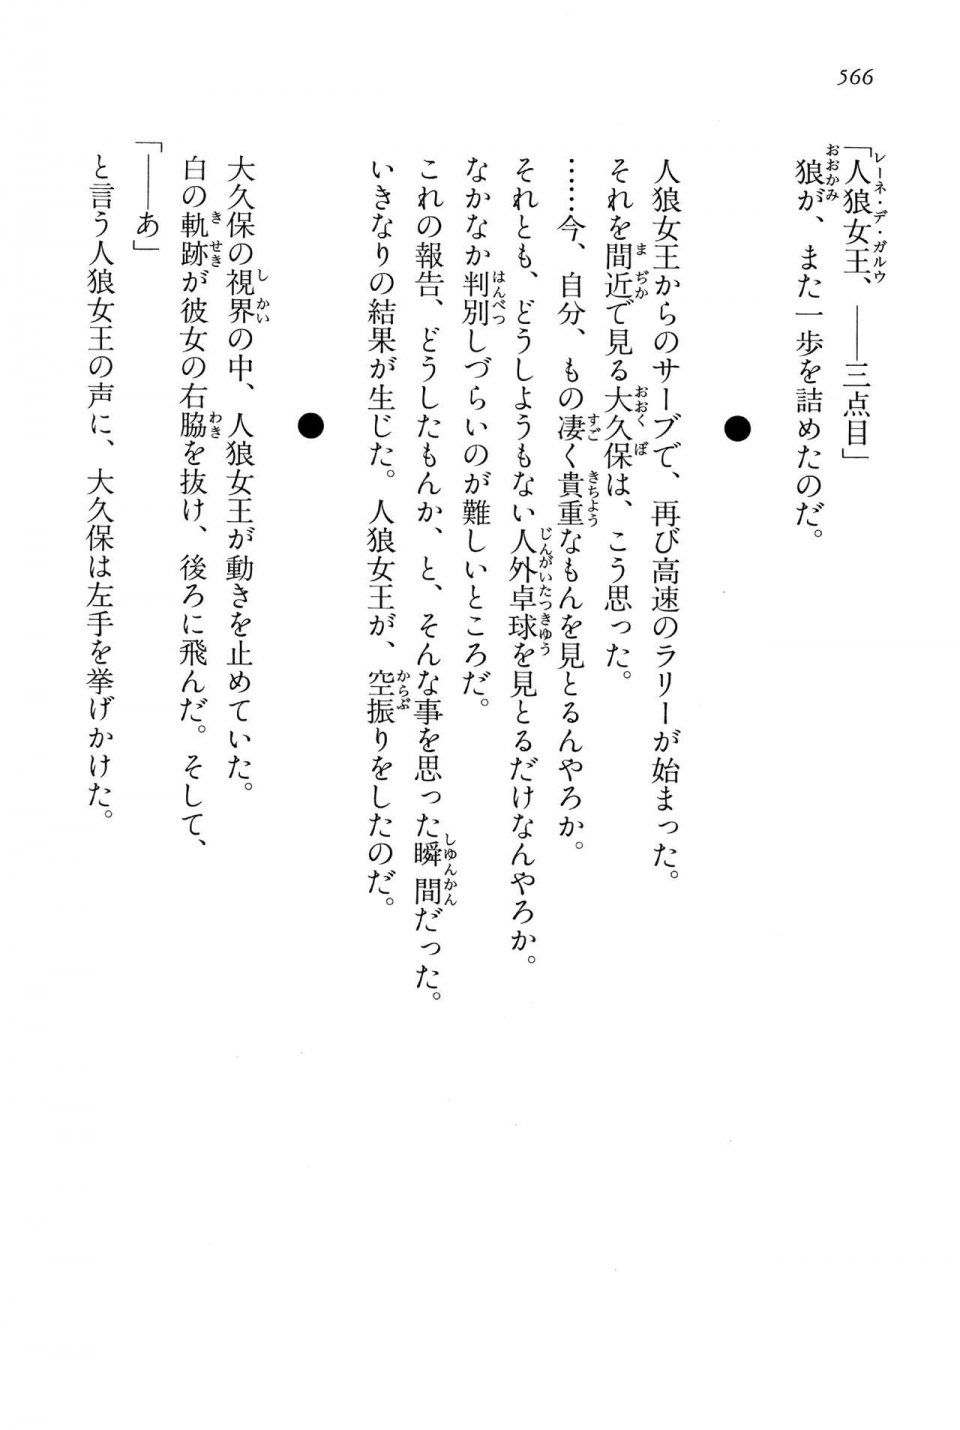 Kyoukai Senjou no Horizon LN Vol 15(6C) Part 2 - Photo #36